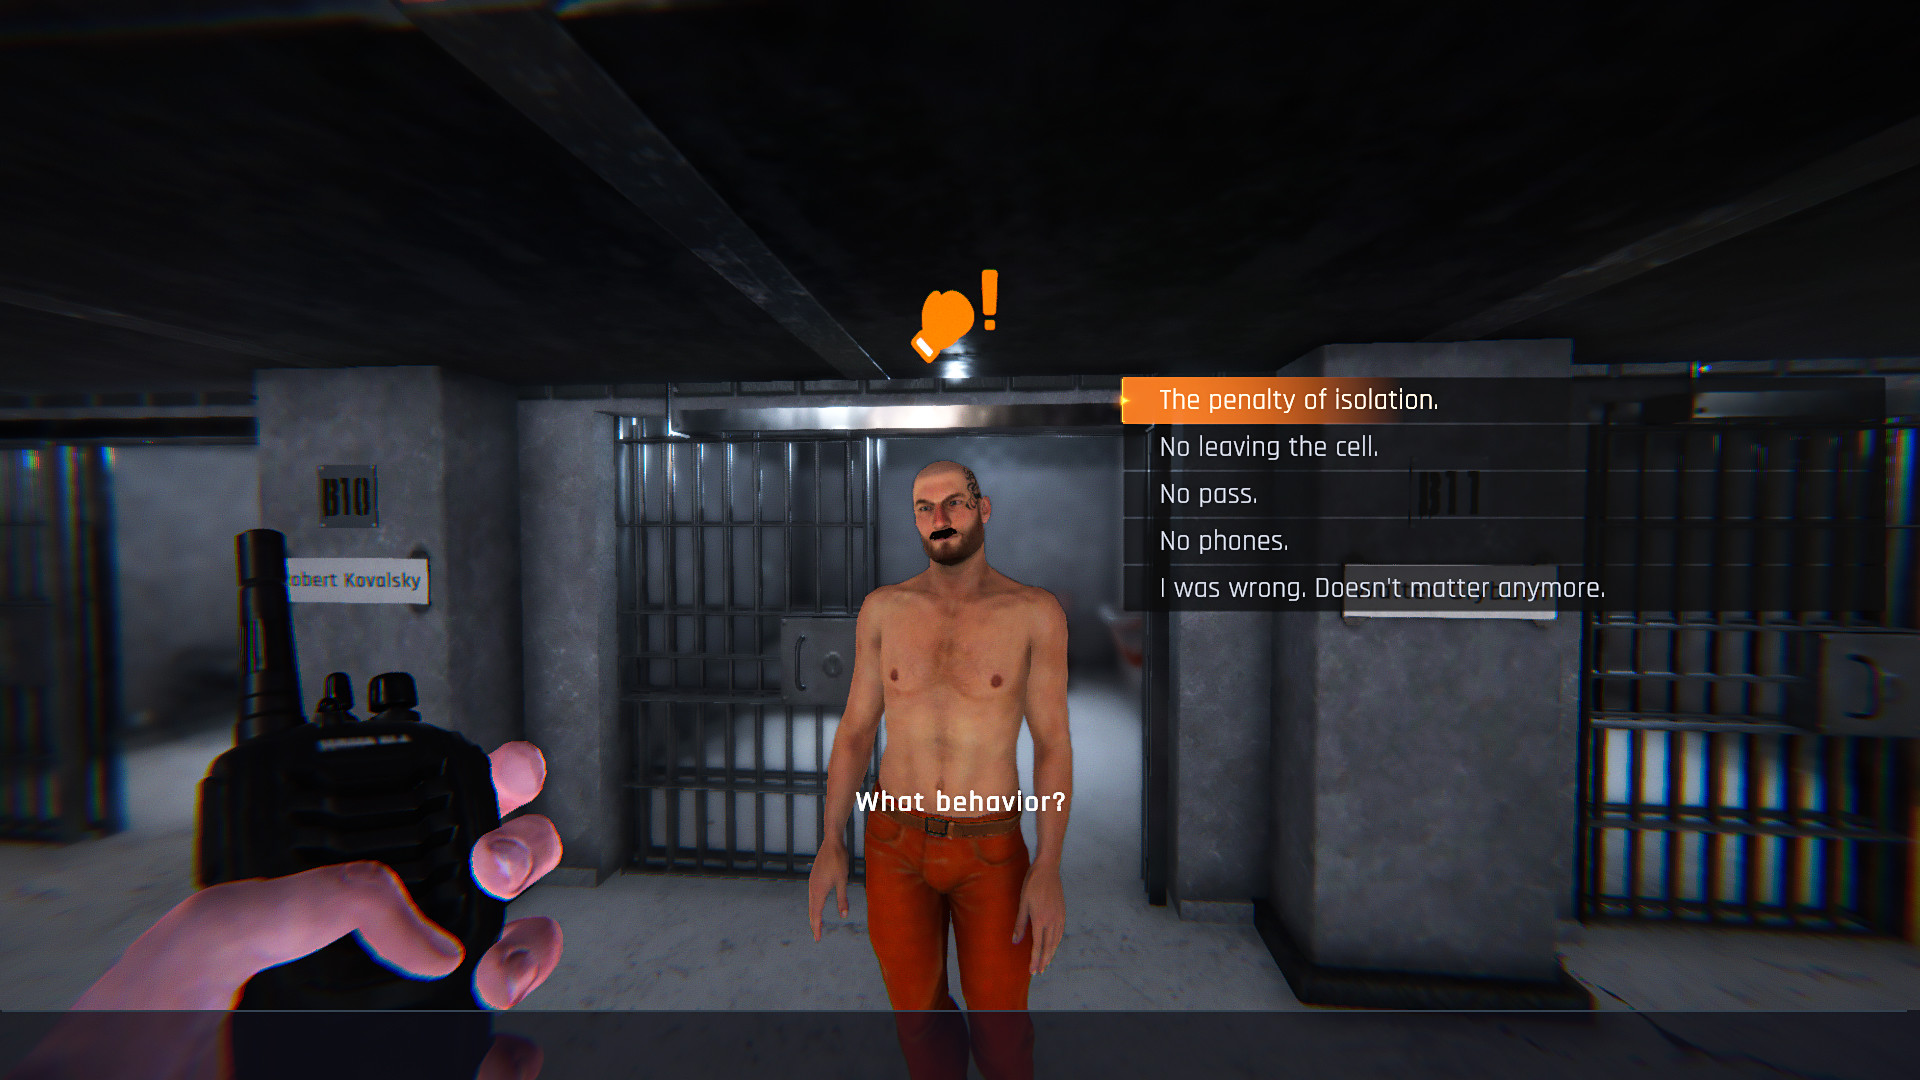 Prison Simulator Steam CD Key